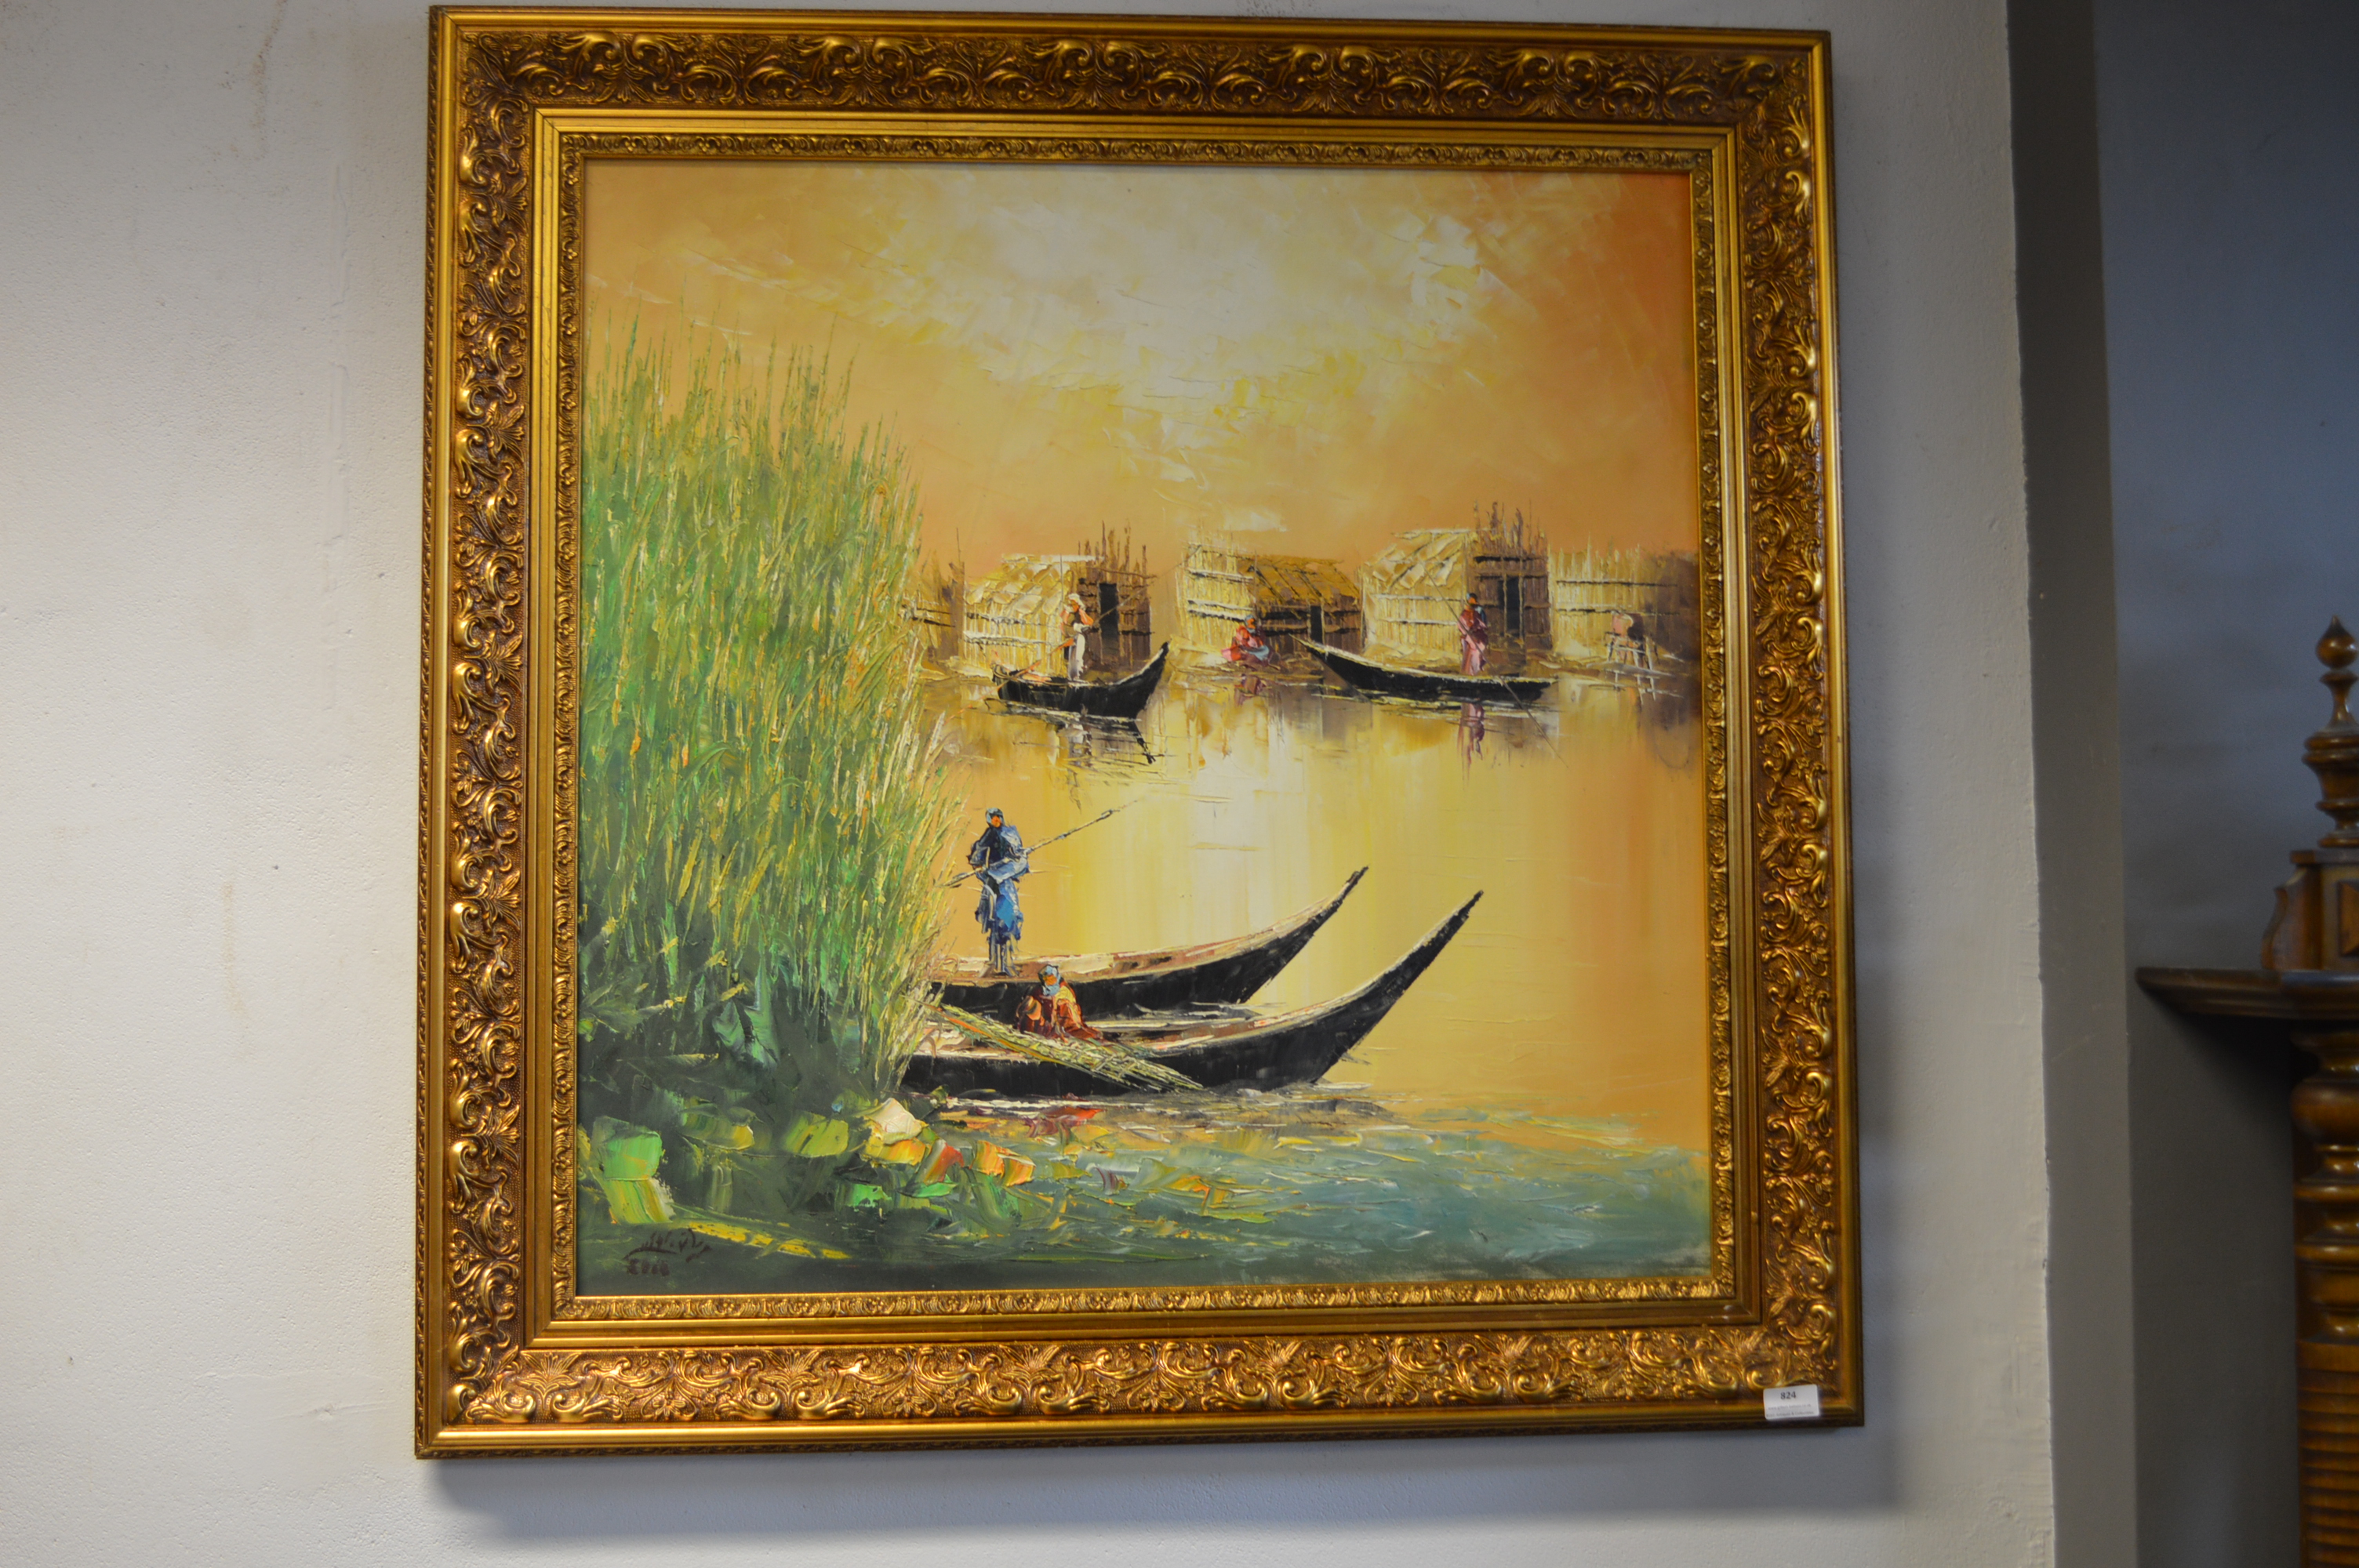 Ornate Gilt Framed Oil on Canvas by Riyadh Alqisee - Iraq Marsh Arabs